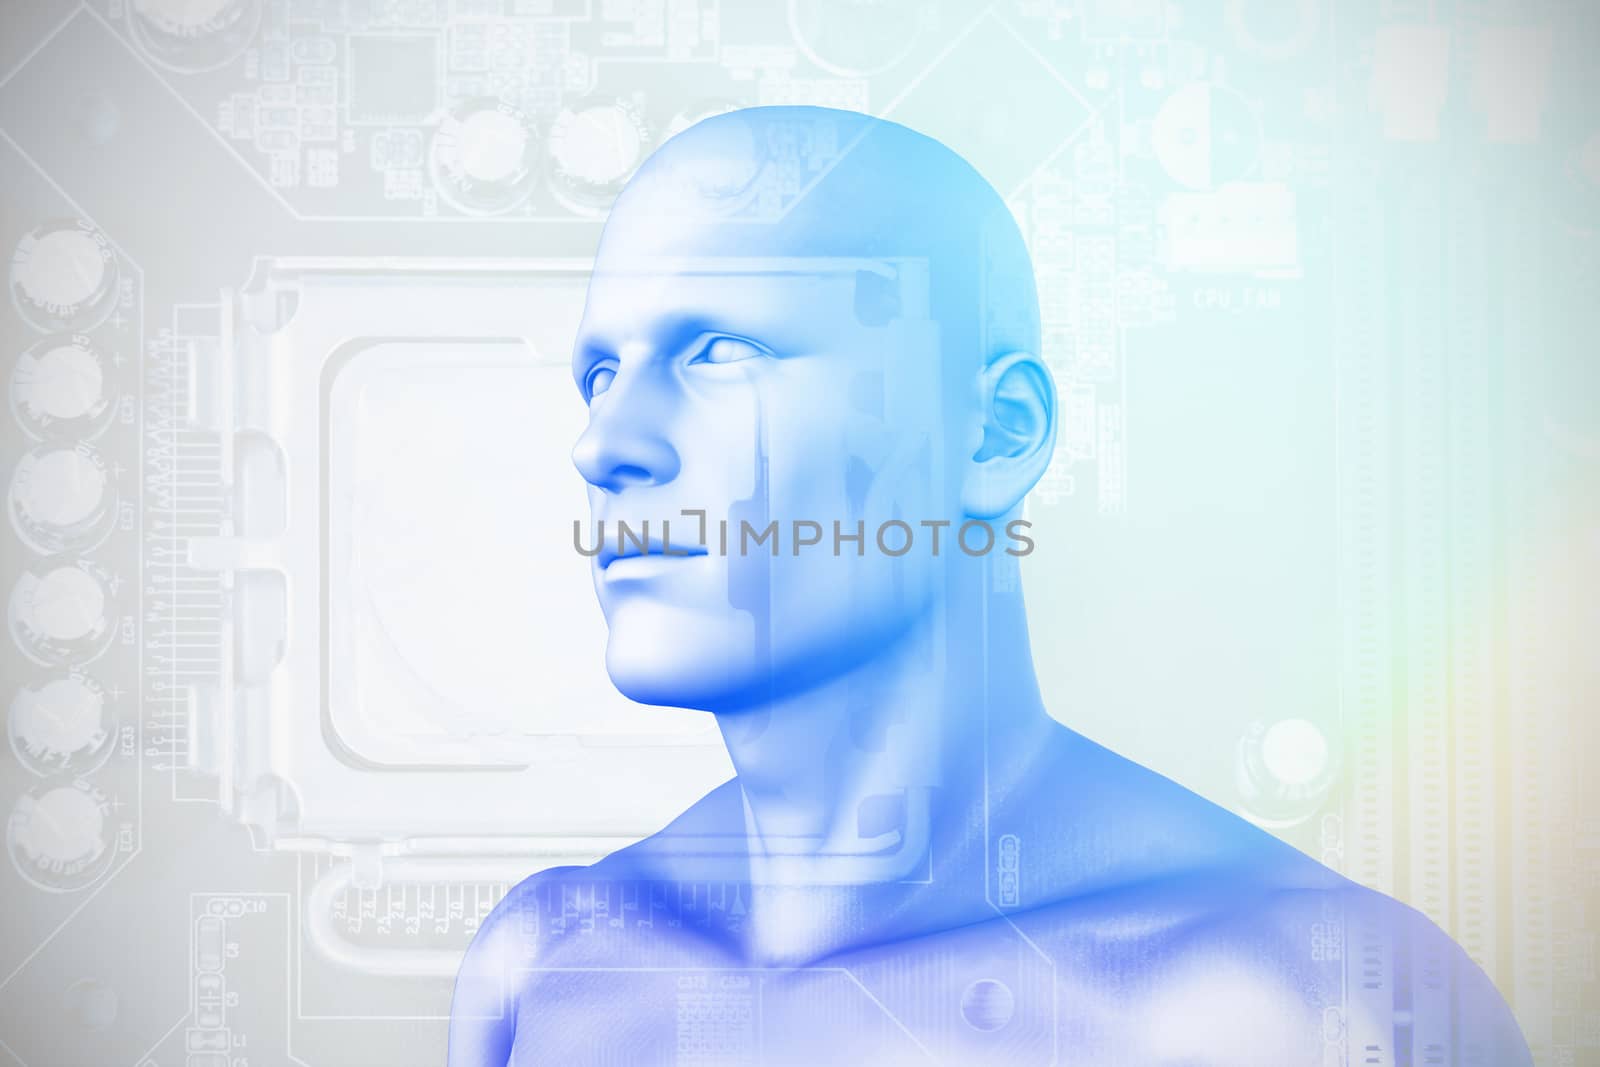 Composite image of digital composite of human figure 3D by Wavebreakmedia